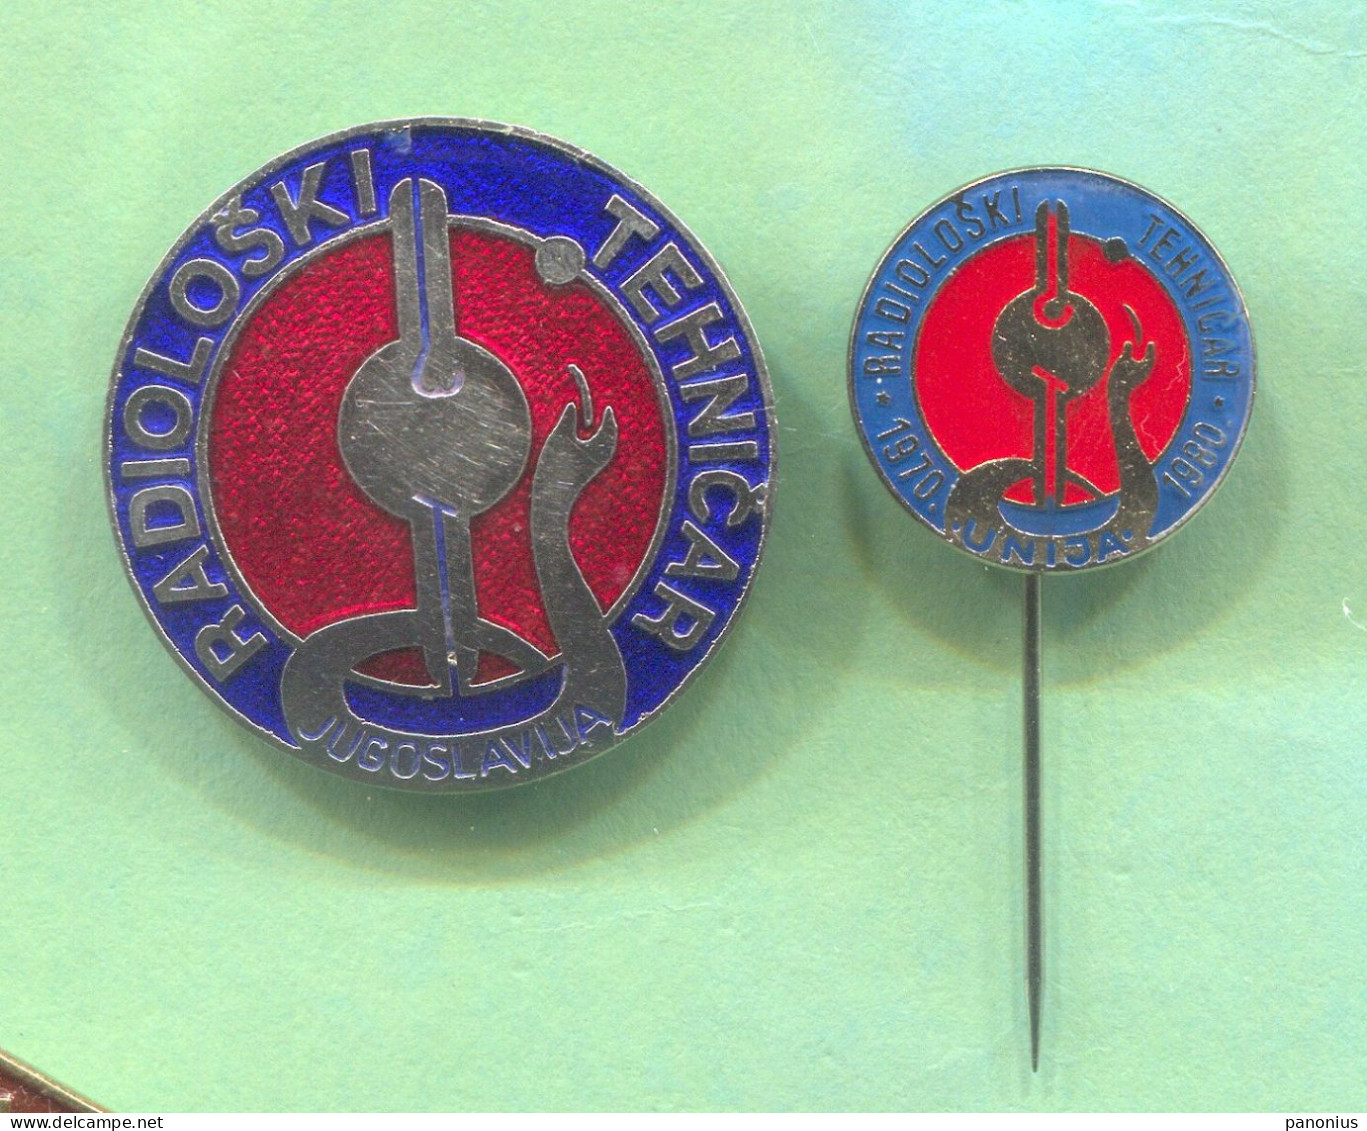 Radiology Technician Yugoslavia, Vintage Pin Badge, Abzeichen, 2 Pcs - Medical